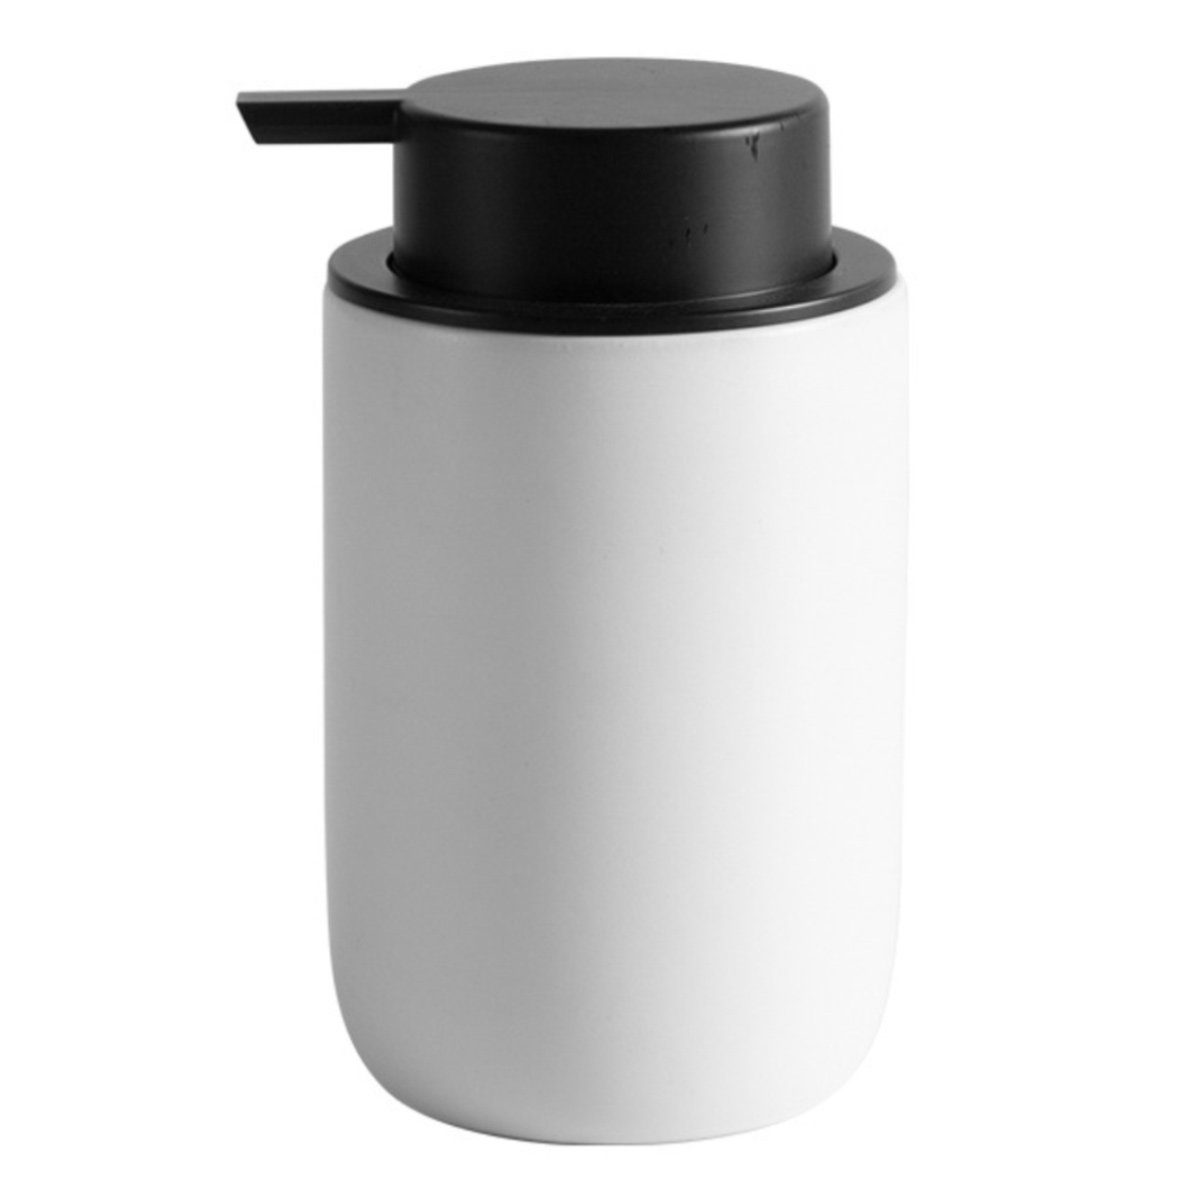 Jormftte Seifenspender Seifenspender,Soap Dispenser Keramik,für Handseife,Shampoo,Duschgel Weiß